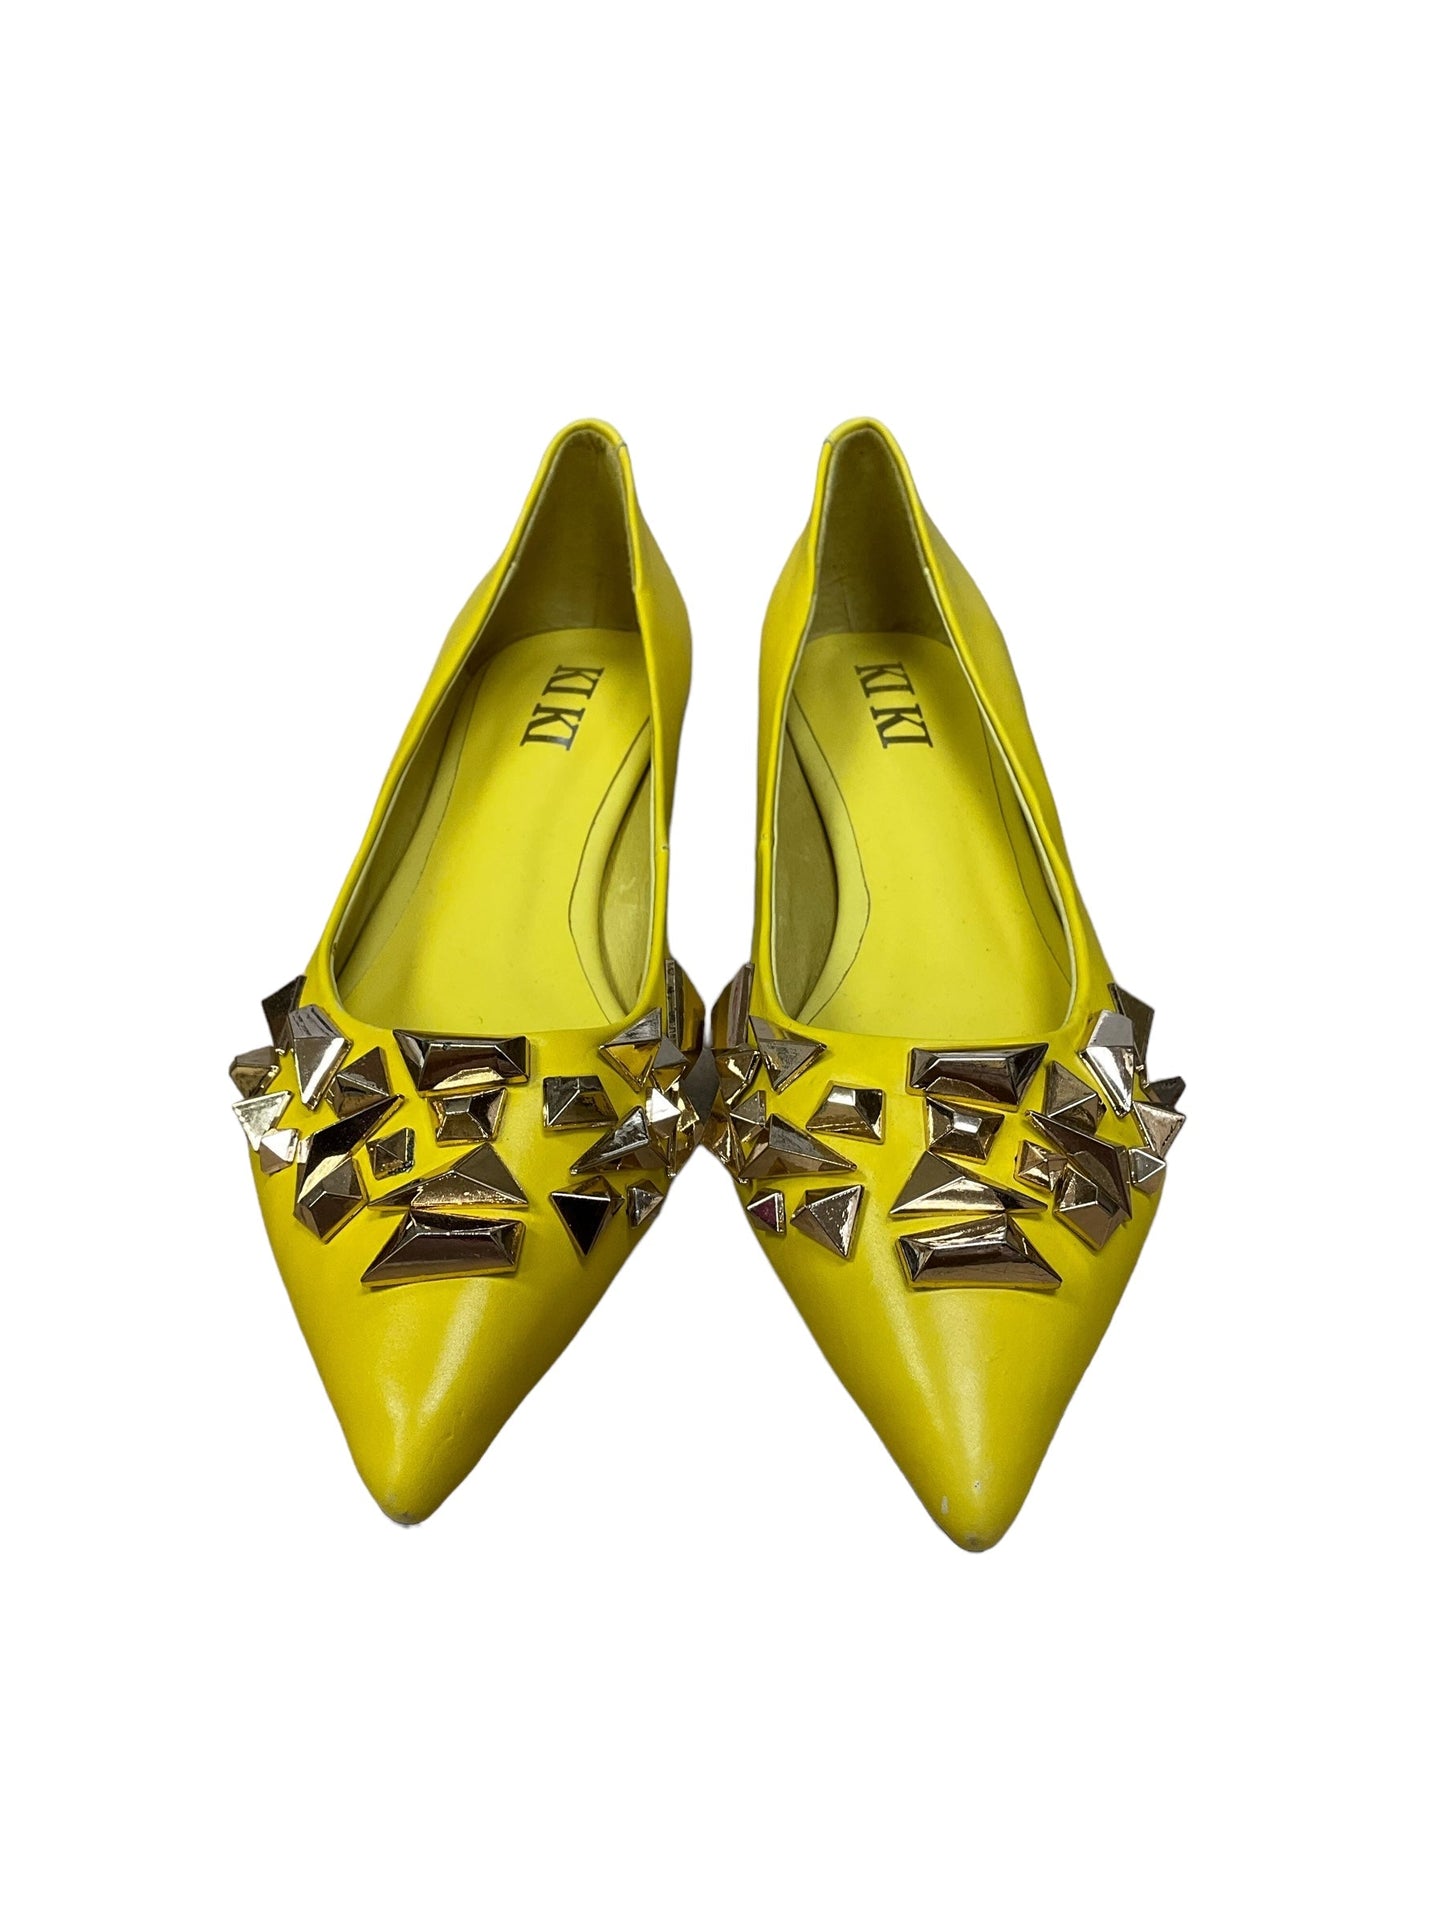 Yellow Shoes Flats Cmc, Size 6